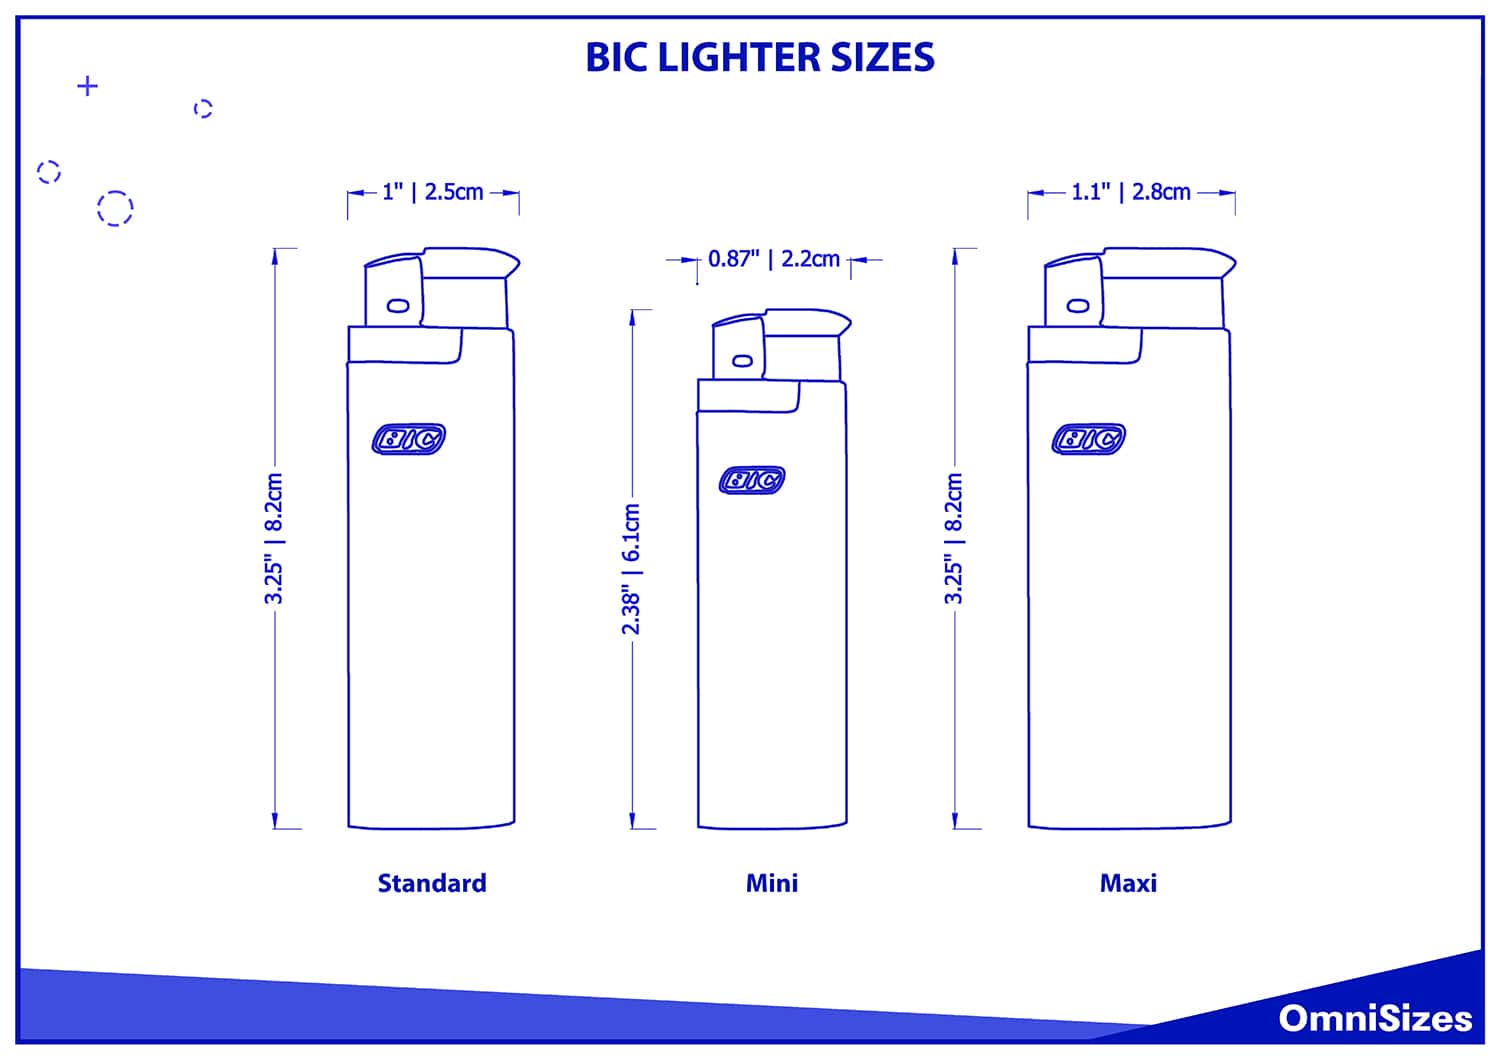 BIC lighter sizes